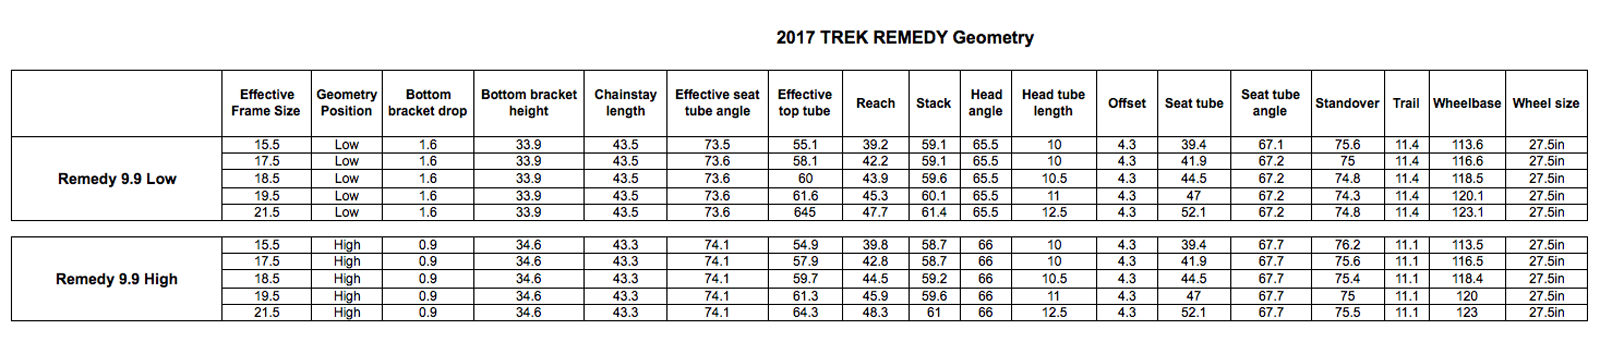 2017-Remedy-Geometry.png?w=1600